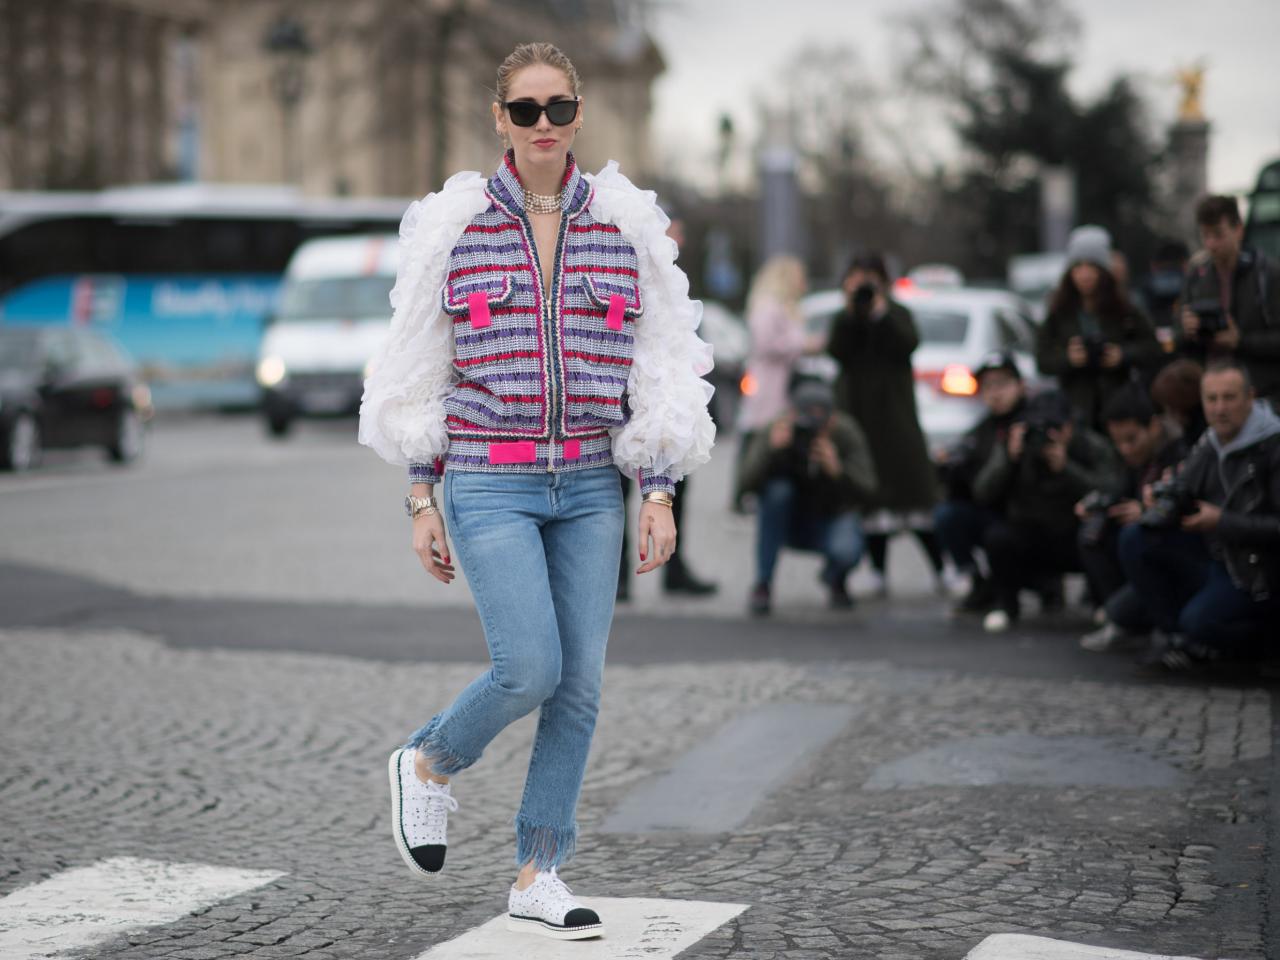 Paris Fashion Week February 2017 Street Style | Travel Channel Blog ...